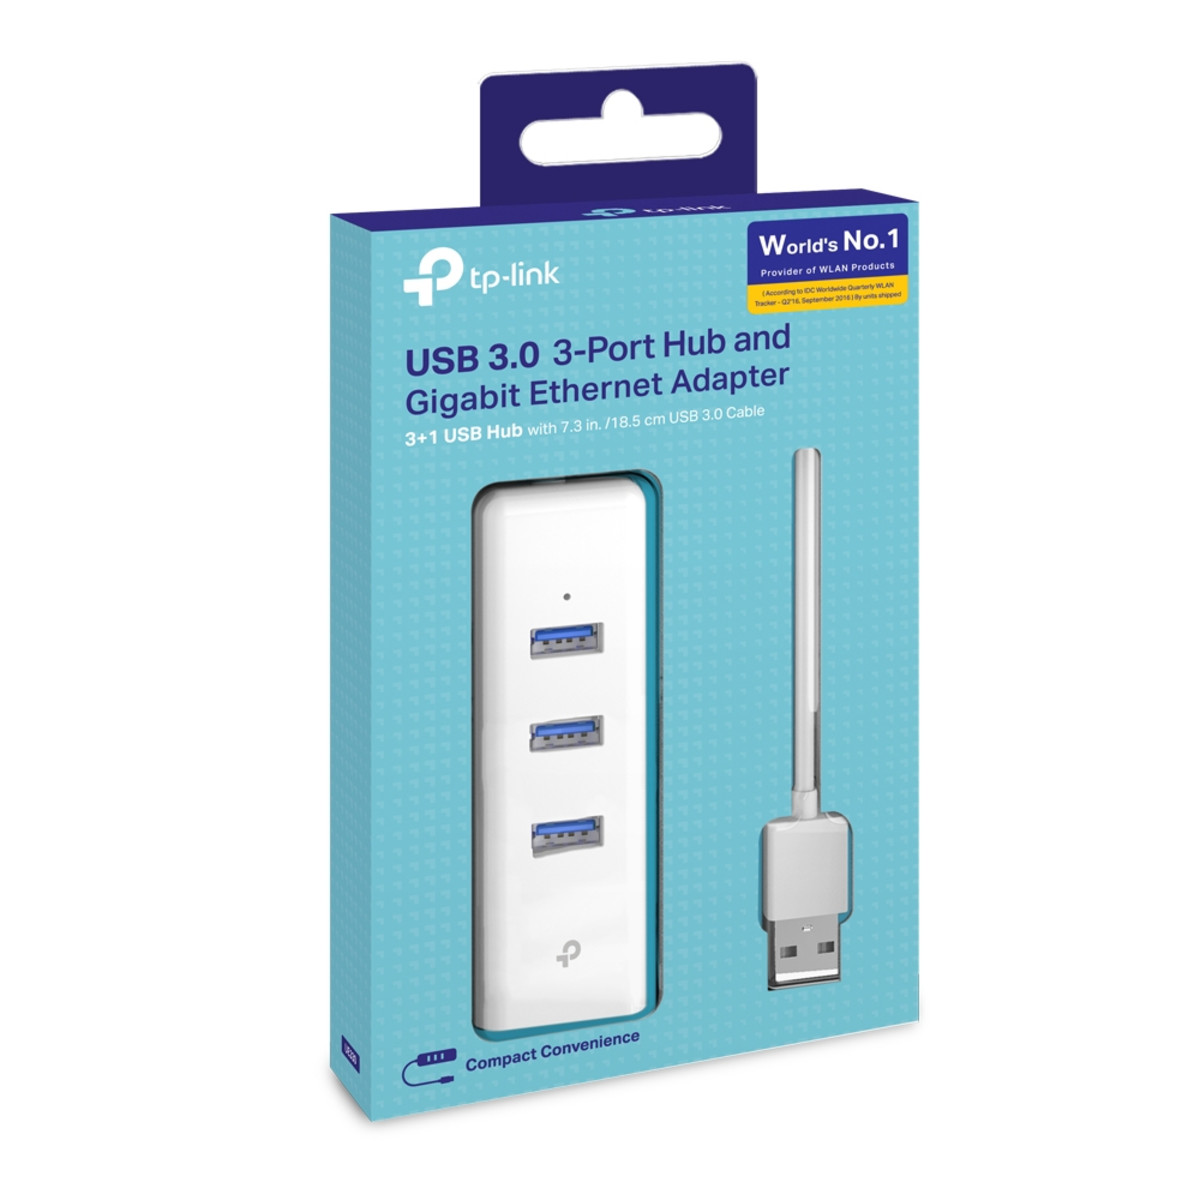 3-Port USB 3.0 Hub GB Ethernet Adapter